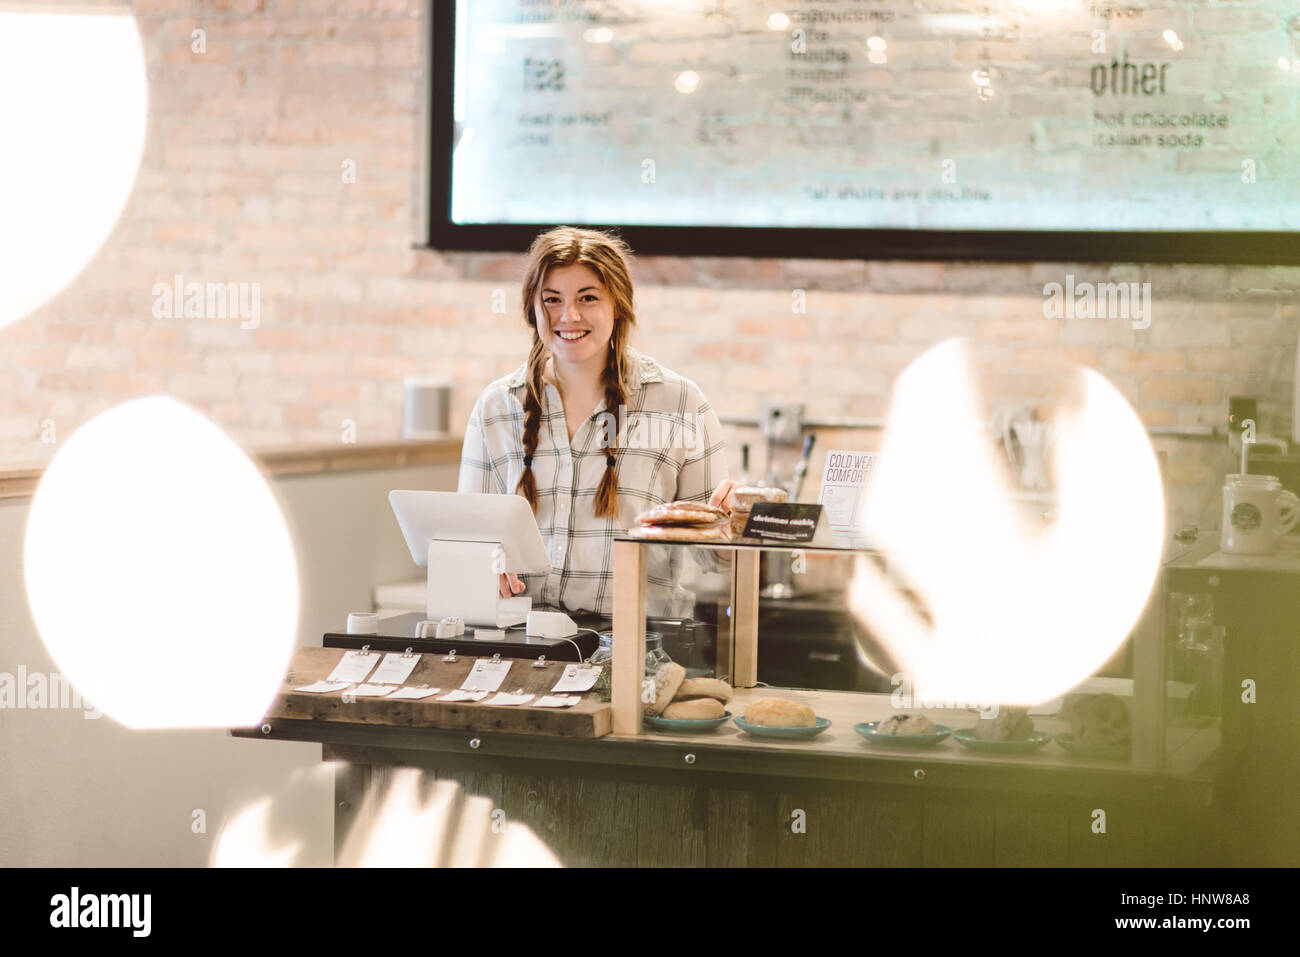 Cashier behind cash register in cafe Stock Photo